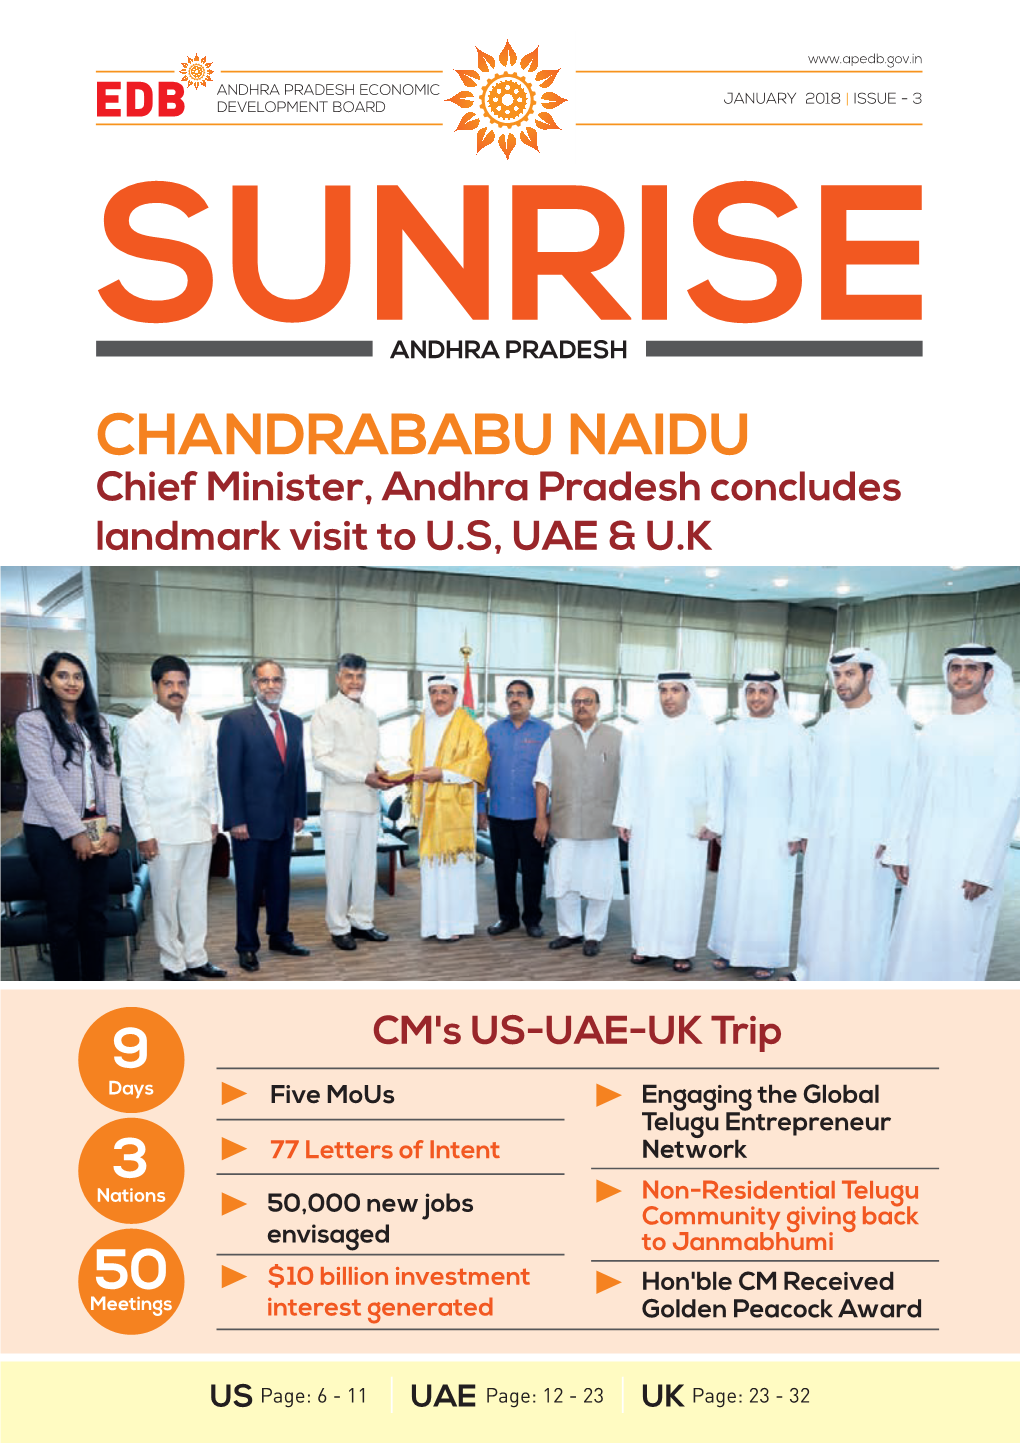 CHANDRABABU NAIDU Chief Minister, Andhra Pradesh Concludes Landmark Visit to U.S, UAE & U.K